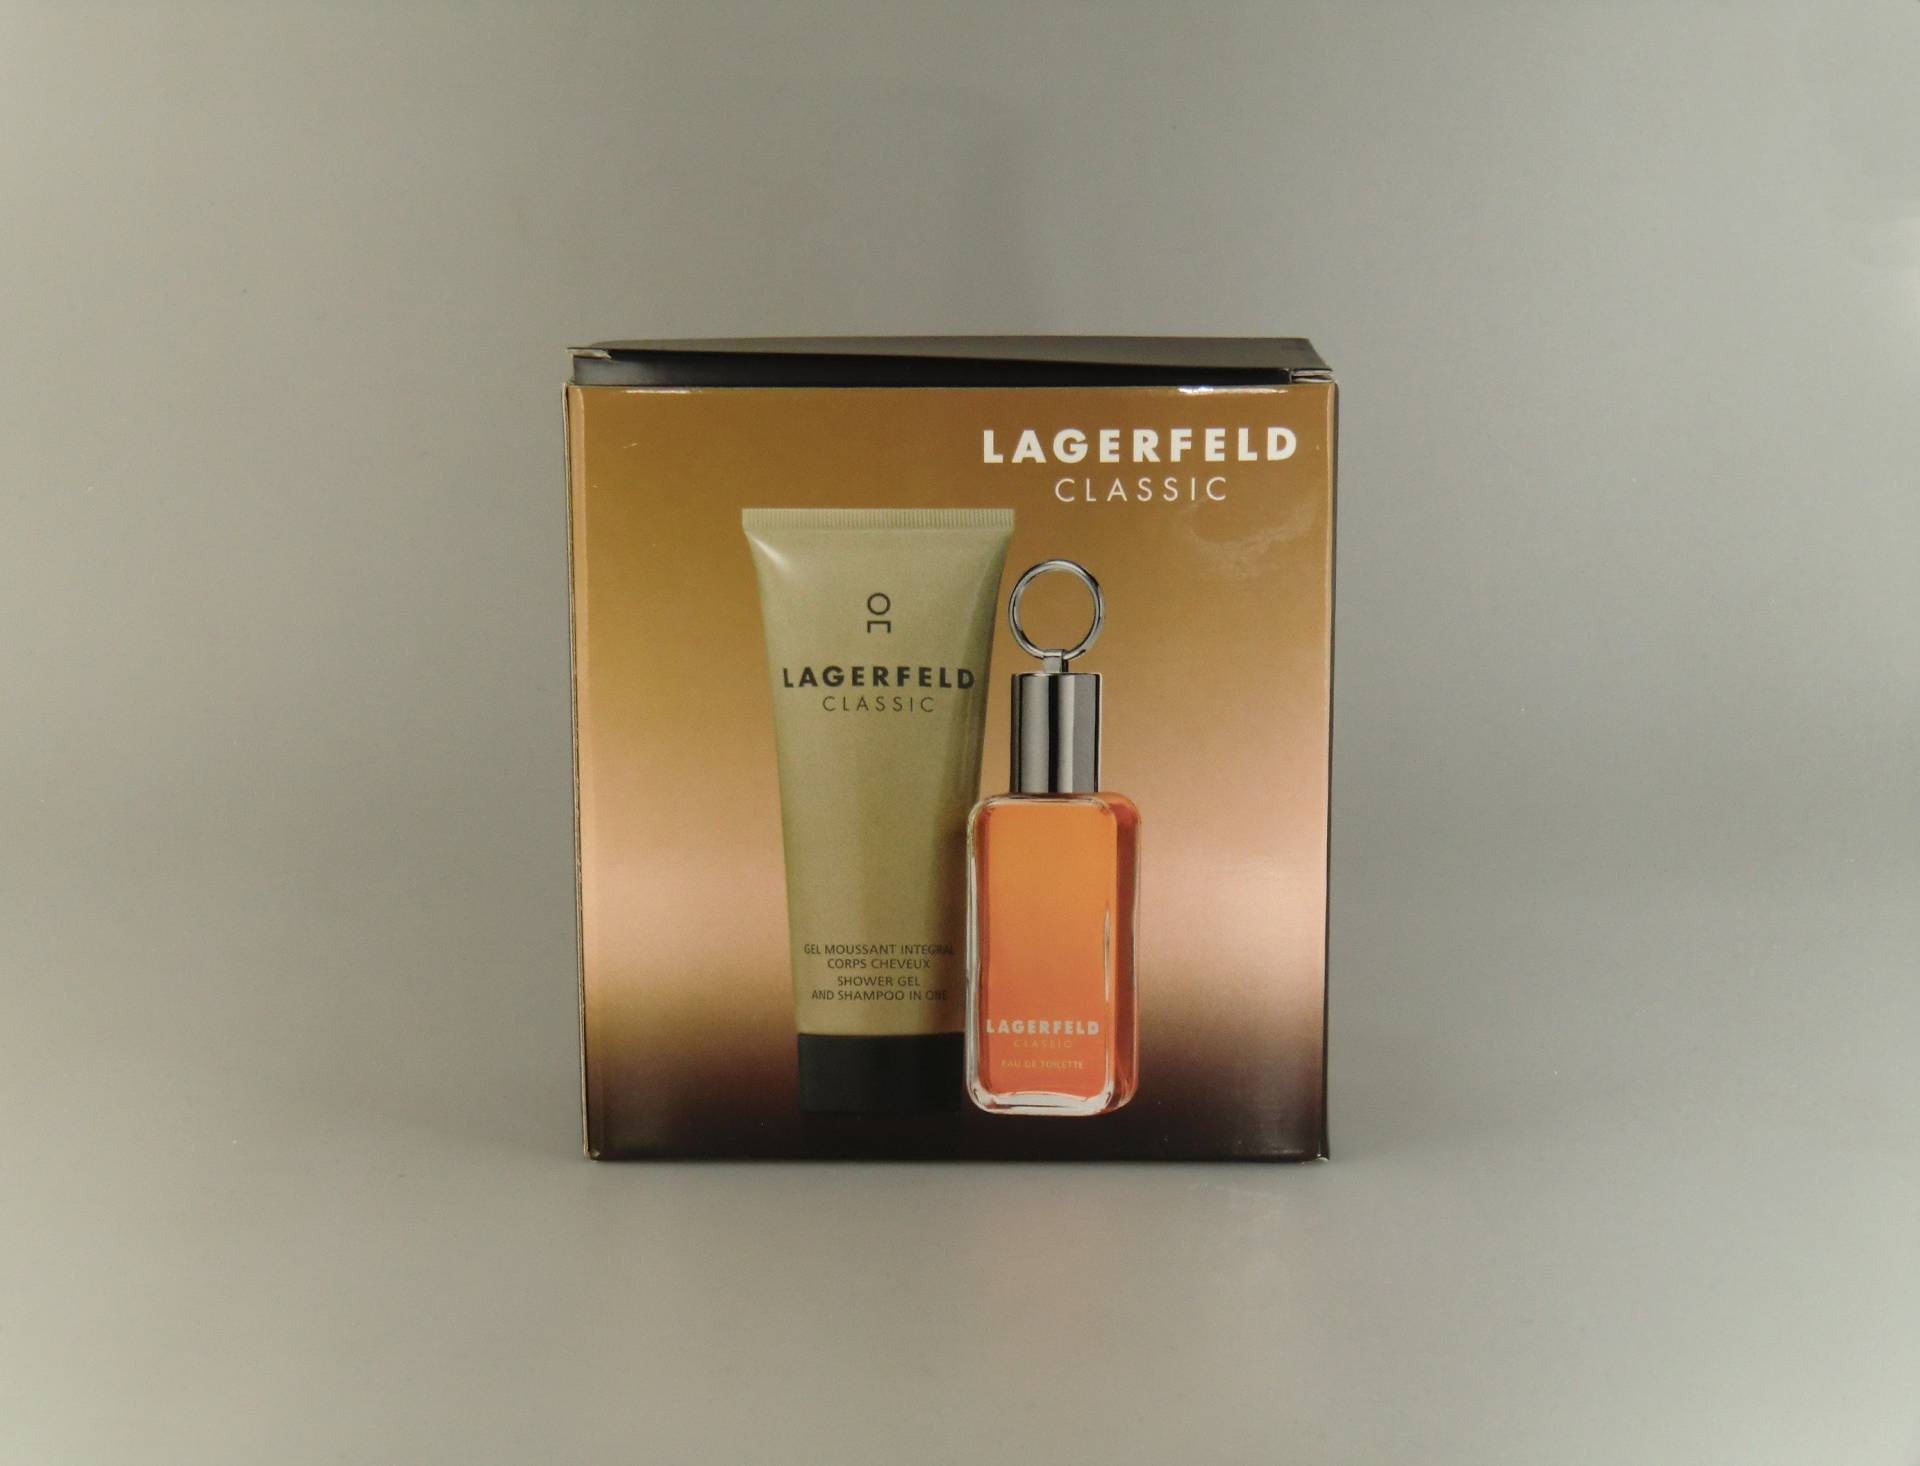 Original Vintage Lagerfeld Classic Set Eau De Toilette Spray 1 Fl.oz./30Ml + Duschgel Und Shampoo in One 3.3Fl.oz/100Ml von VintageRetroEu